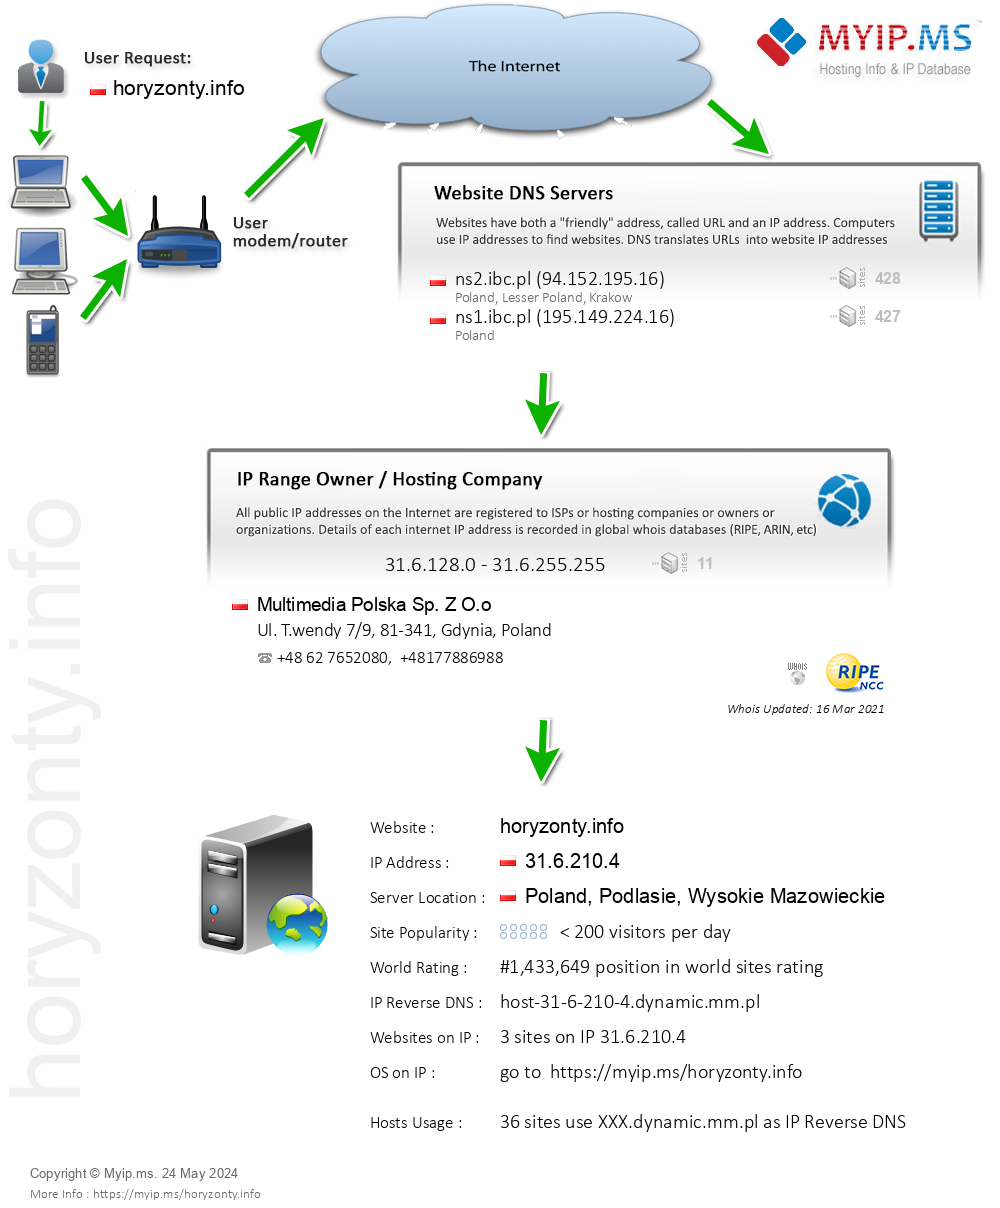 Horyzonty.info - Website Hosting Visual IP Diagram